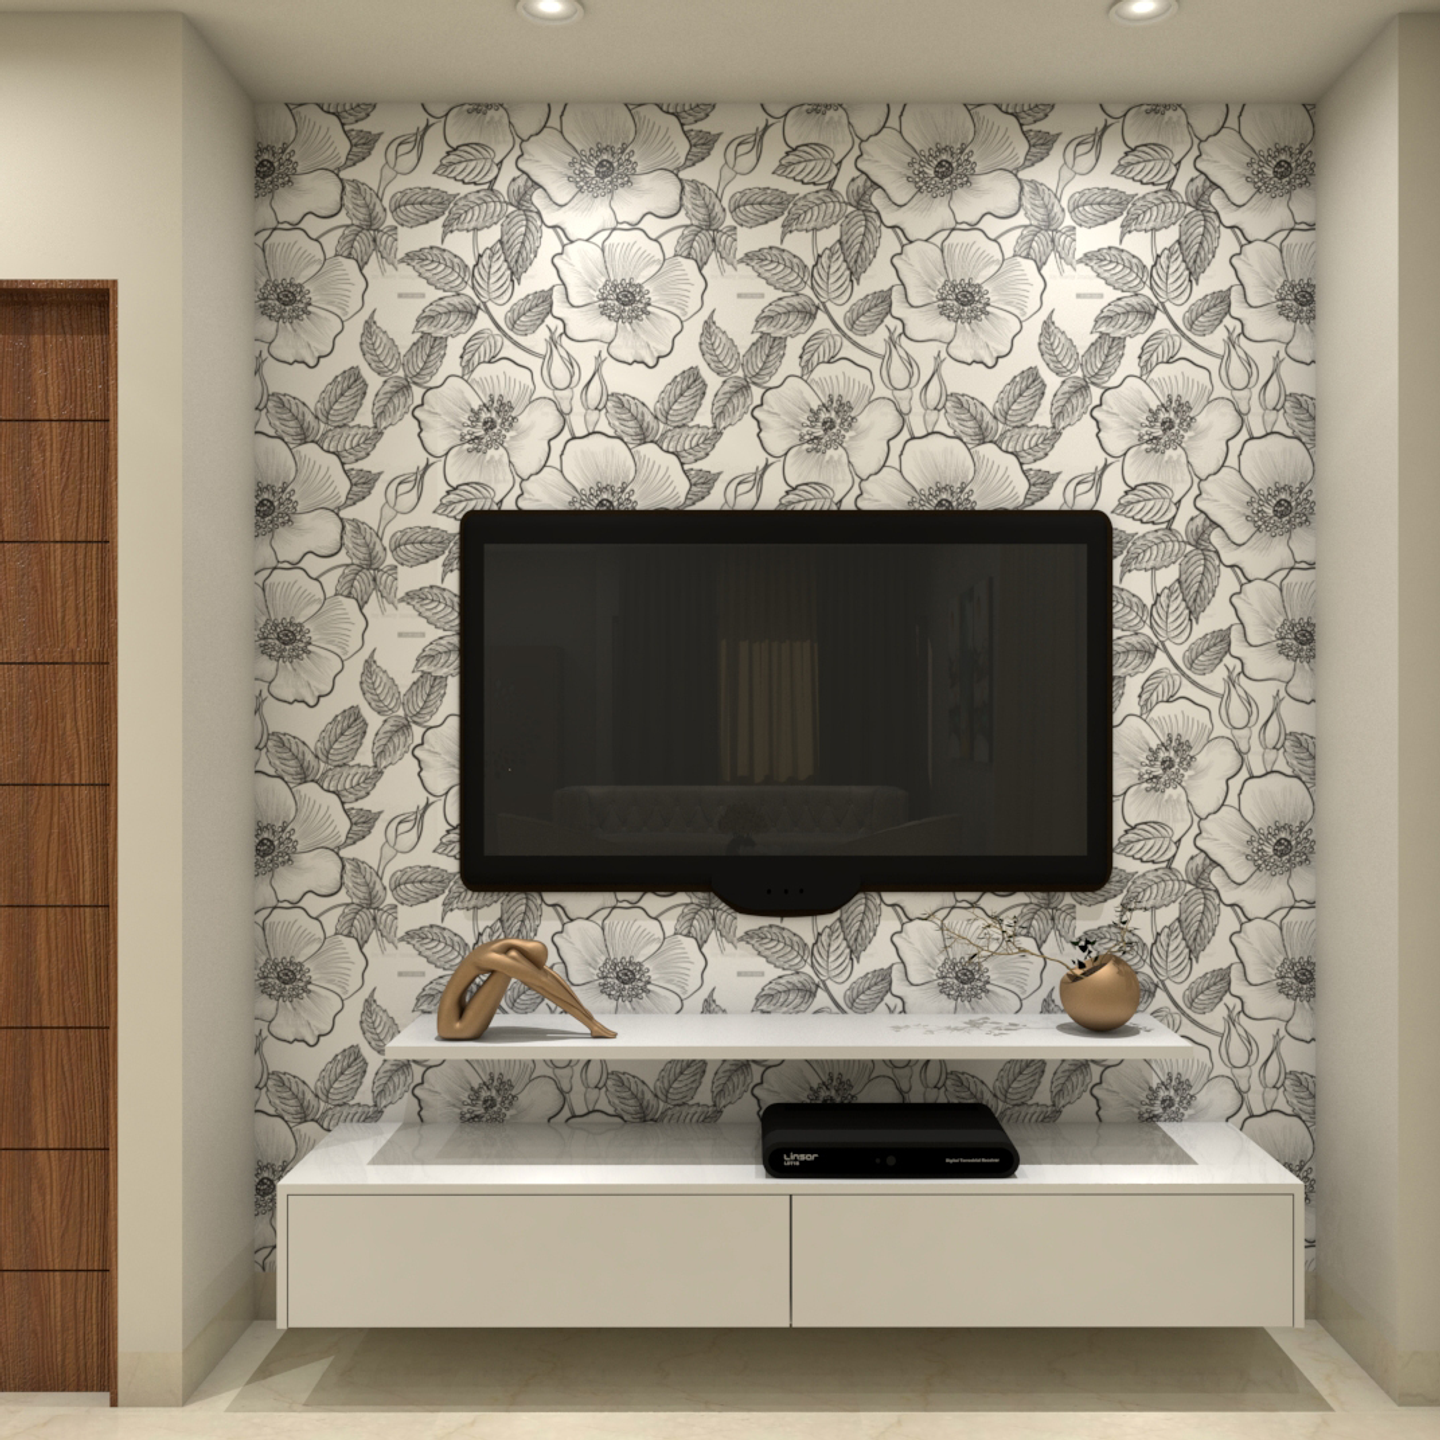 TV Unit Design With Floral Wallpaper - Livspace